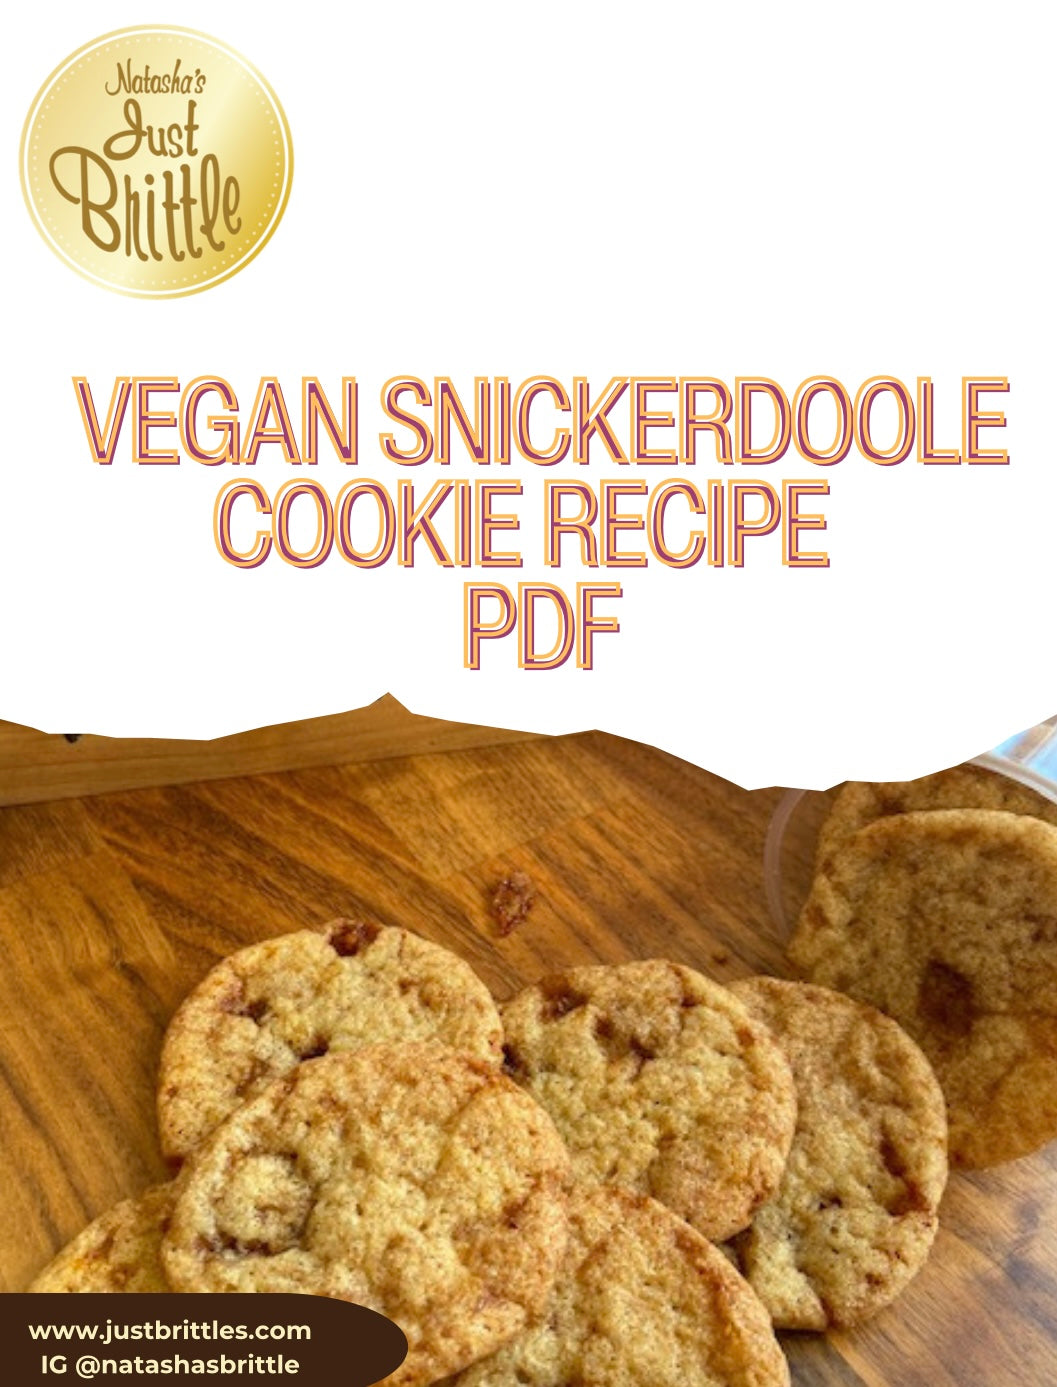 Vegan Snickerdoodle Cookie Recipe!